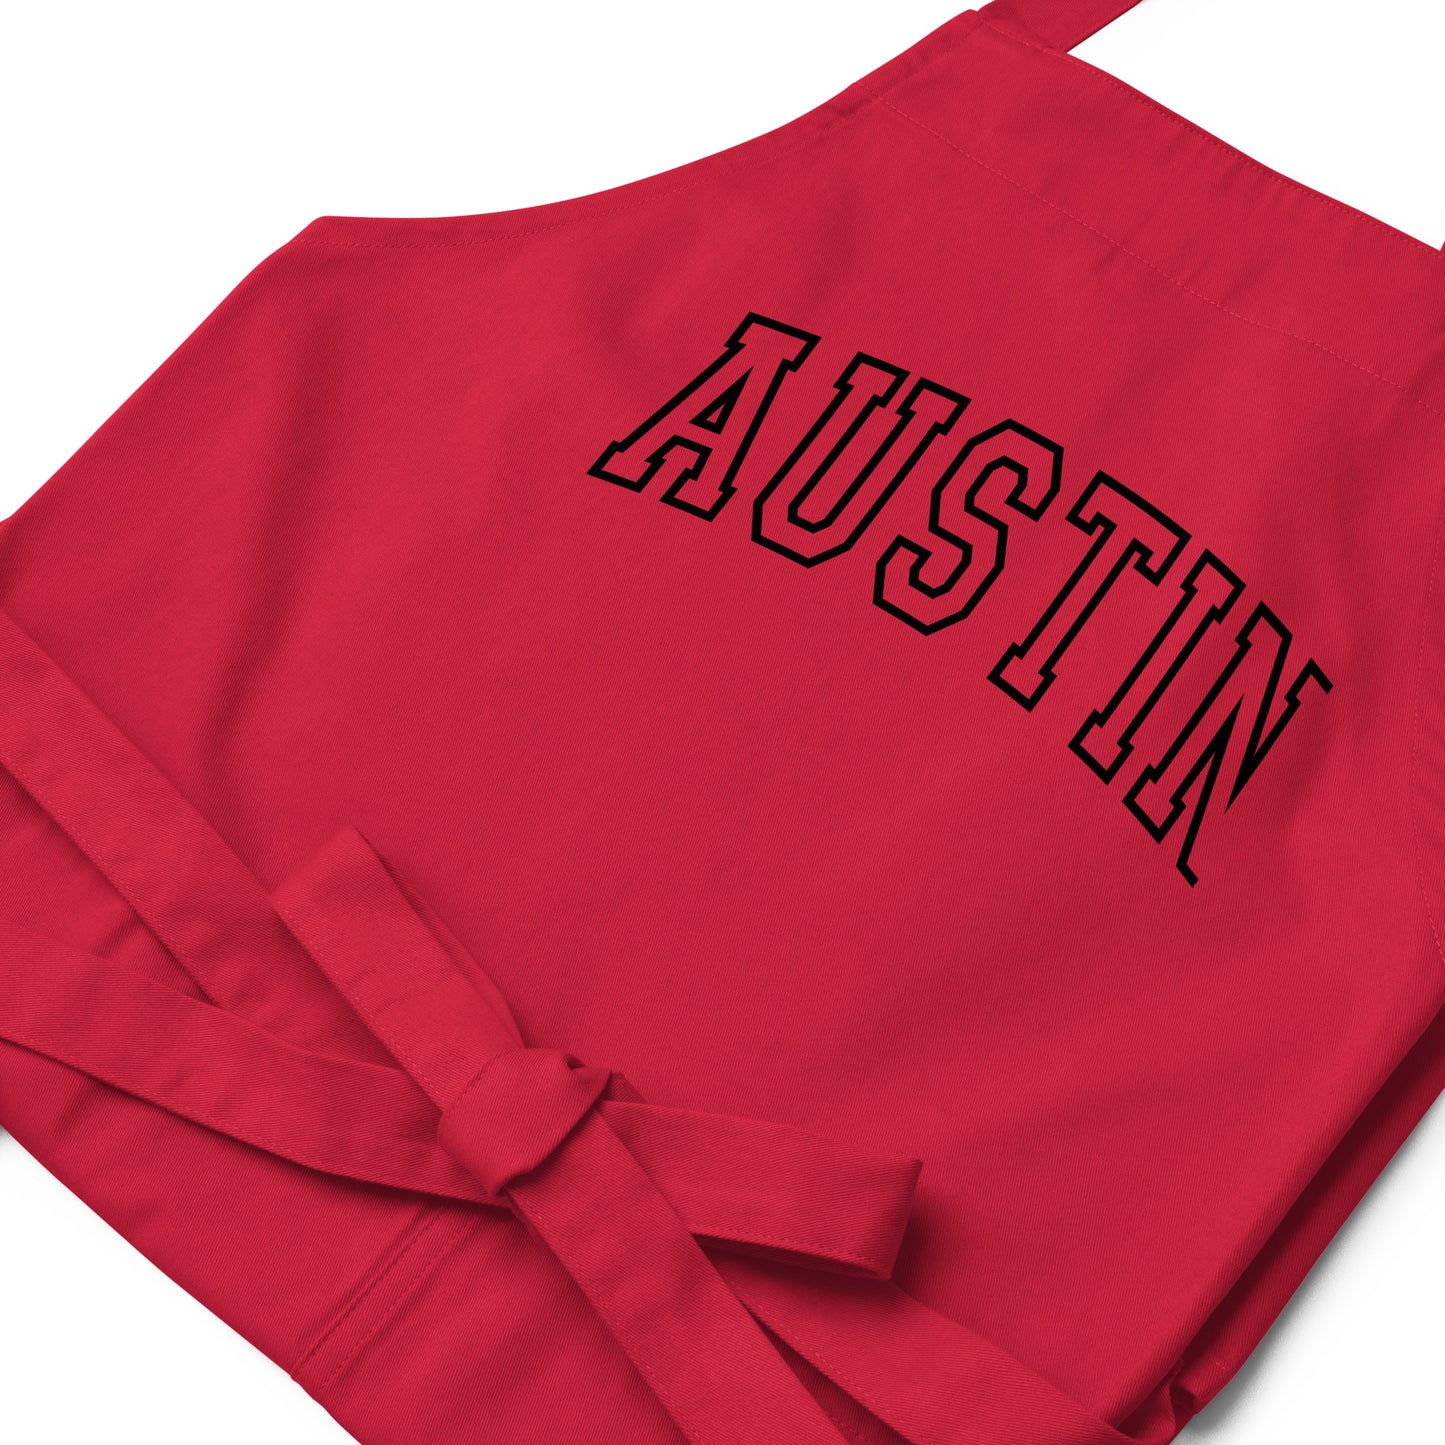 Austin Organic cotton apron